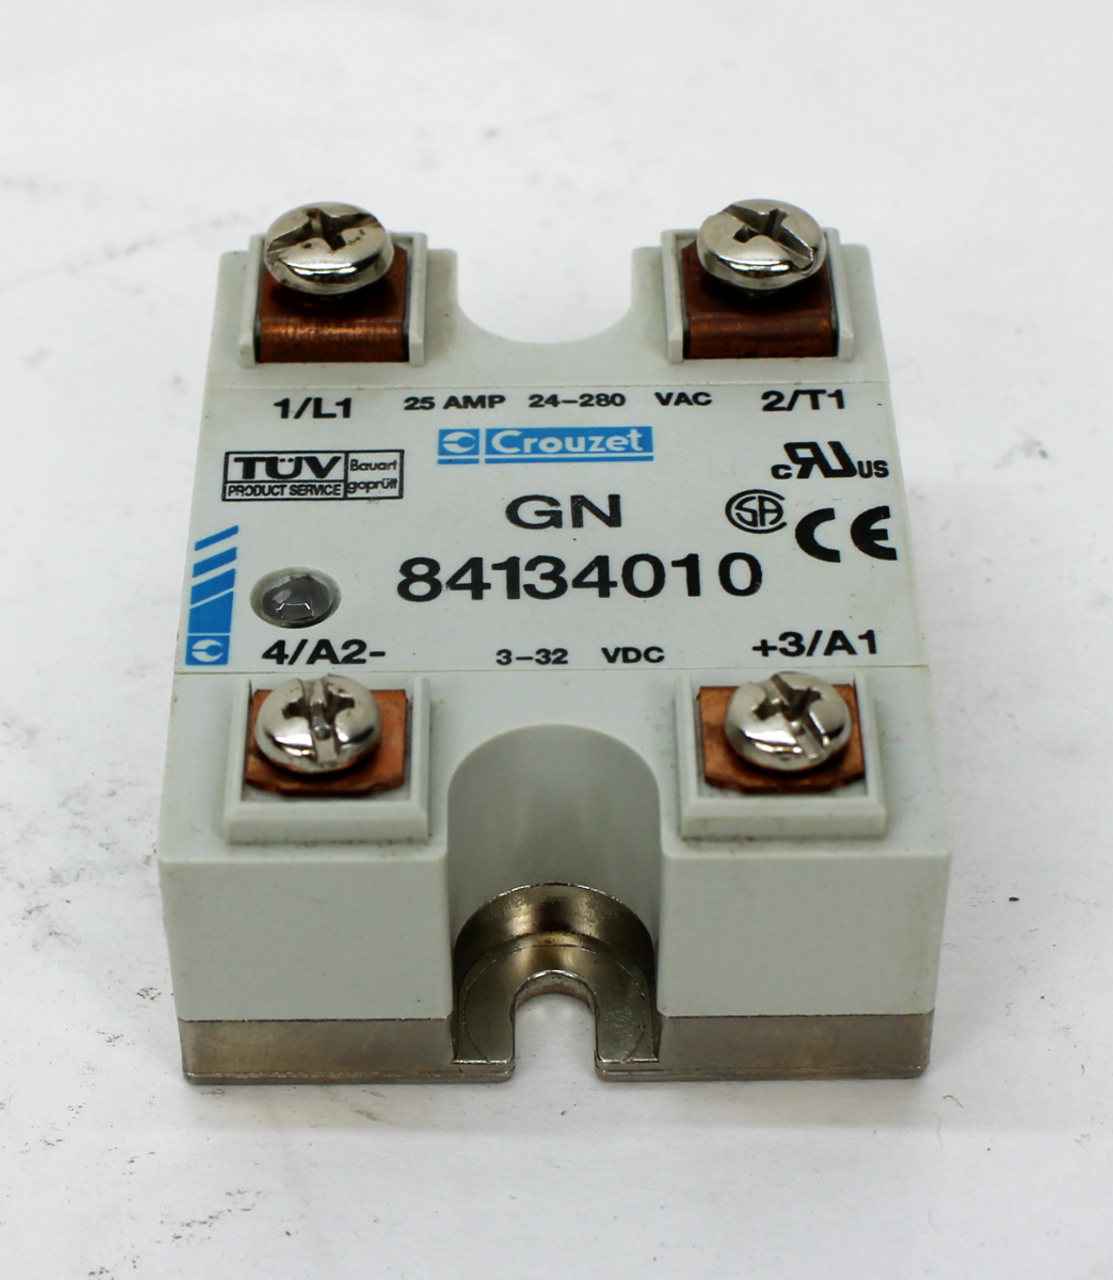 Crouzet 84134010 Solid State Relay, 3-32VDC